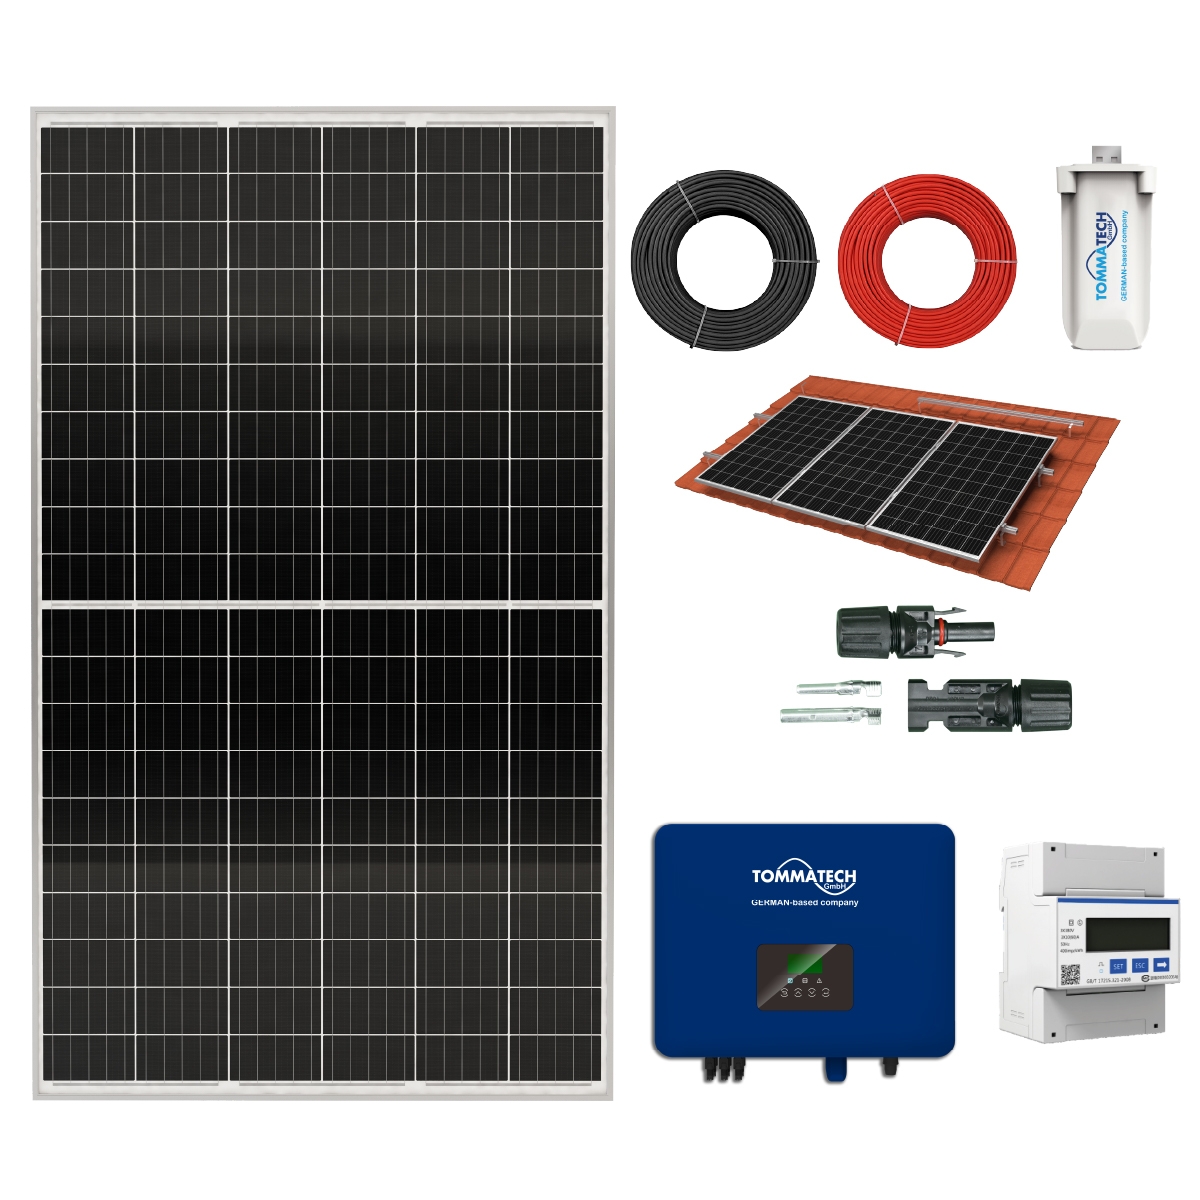 12kW / 17.86kWp Solar On-Grid Plug & Play Solution